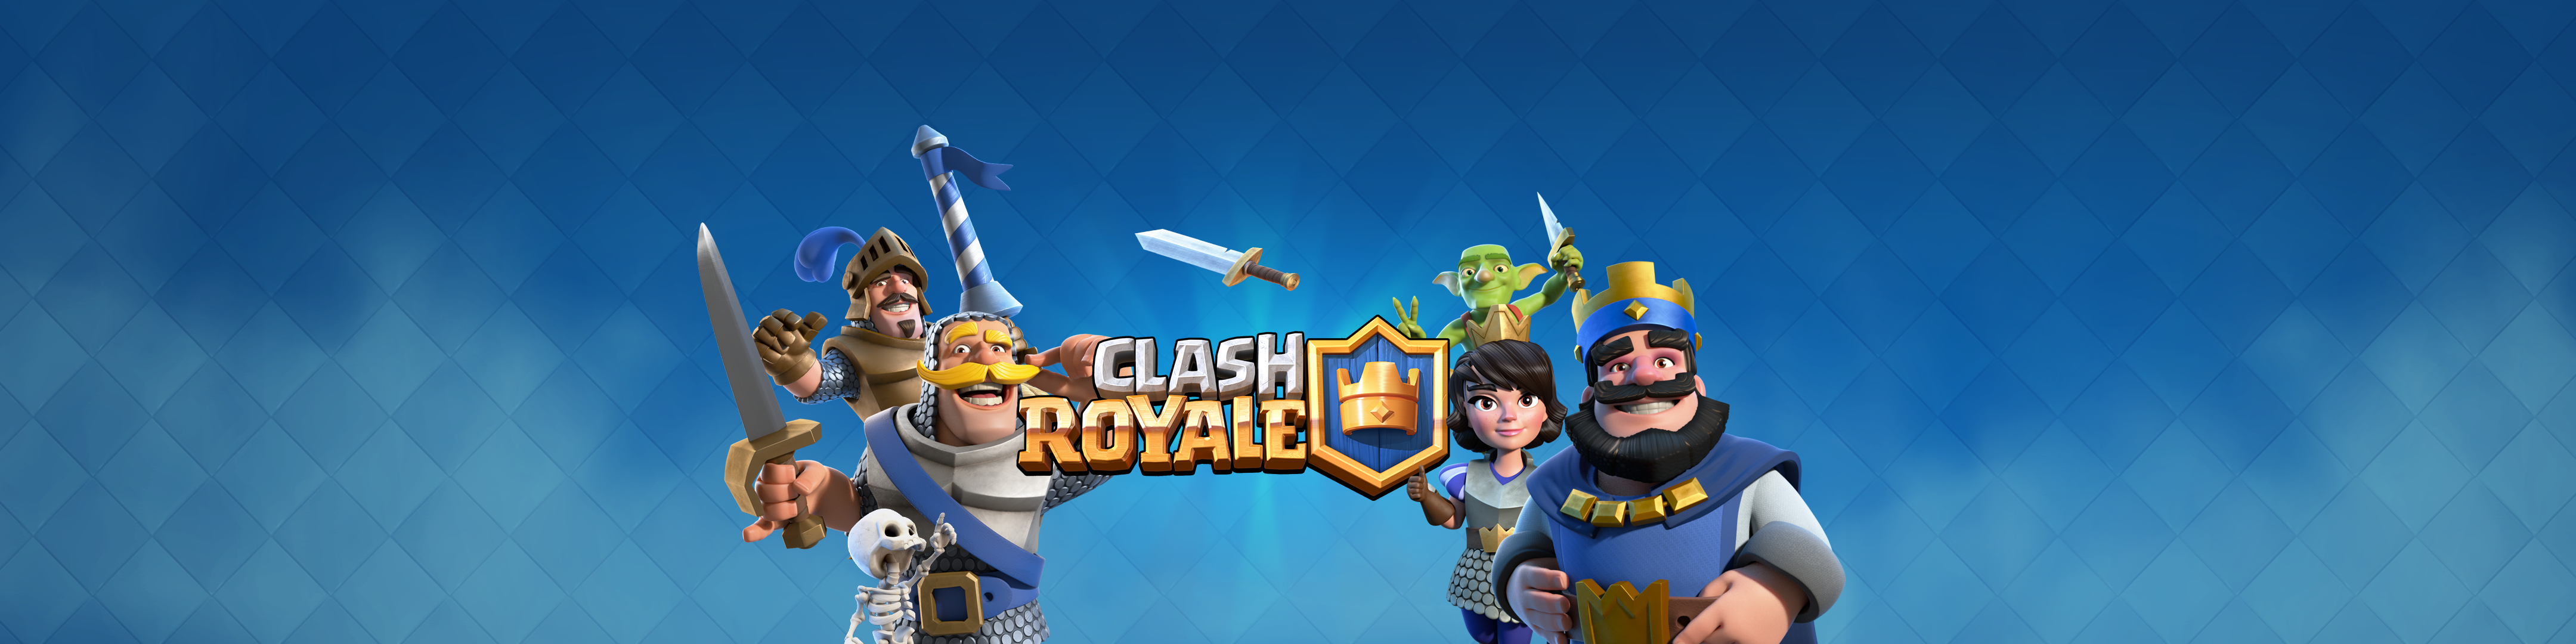 clash royale download free pc